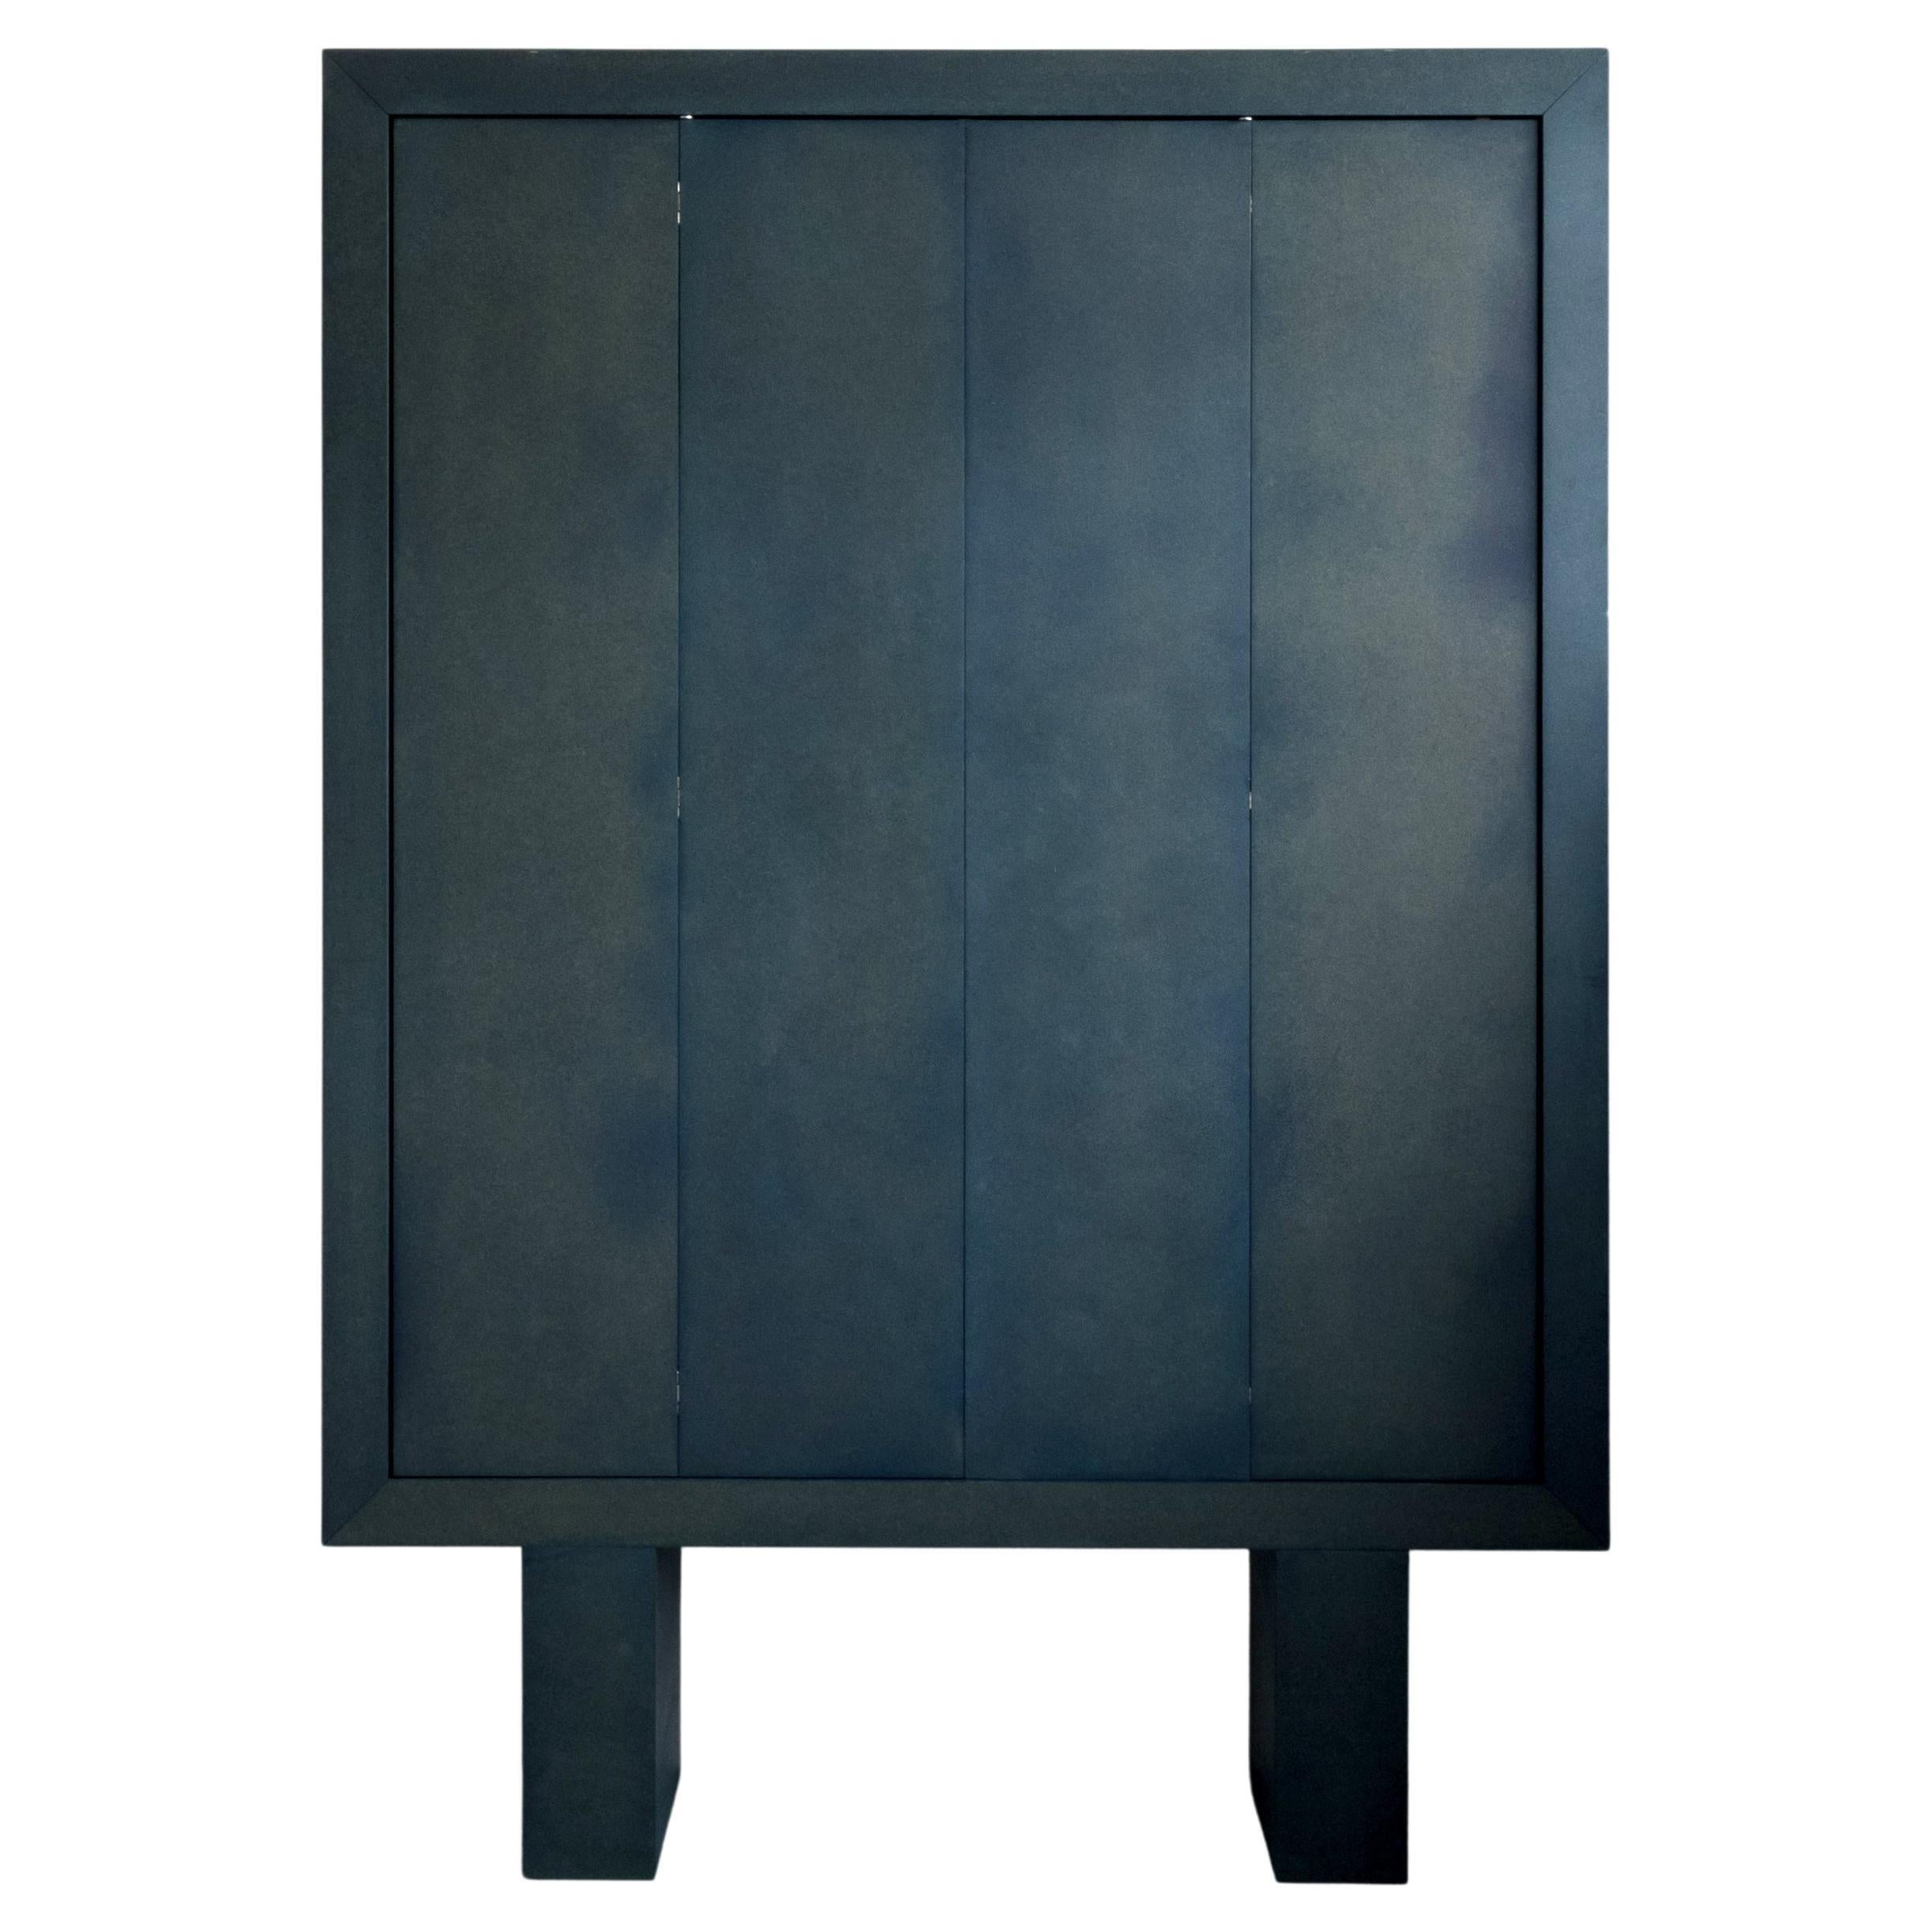 Contemporary 'Monolithic' Storage Cabinet Unit, Paris Blue Dyed MDF